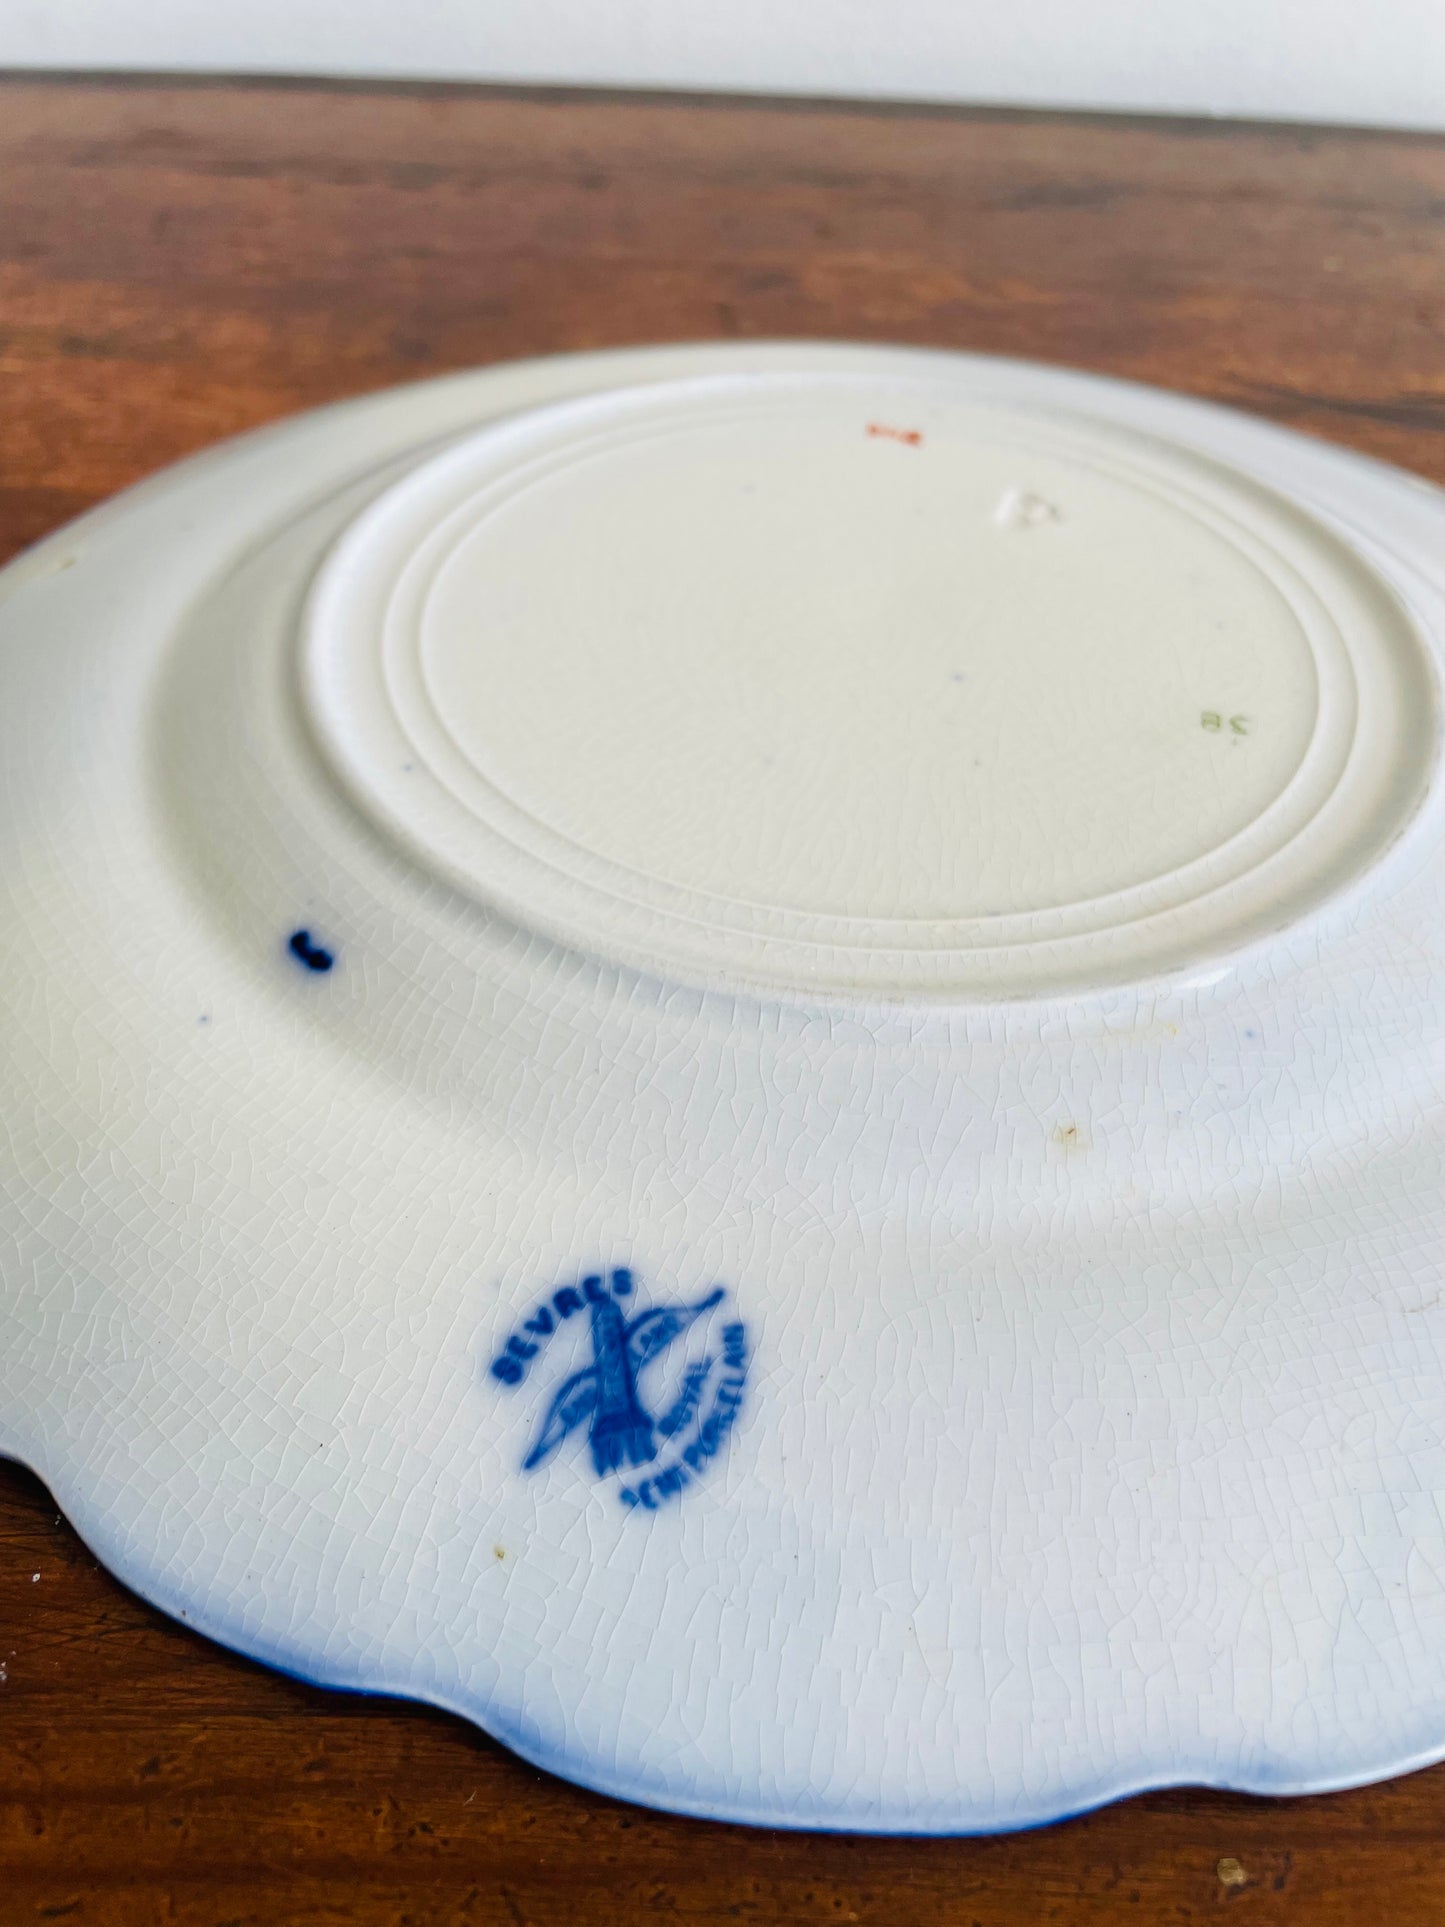 Sevres 9" Royal Semi Porcelain Plate - Blue with Gorgeous Floral Design